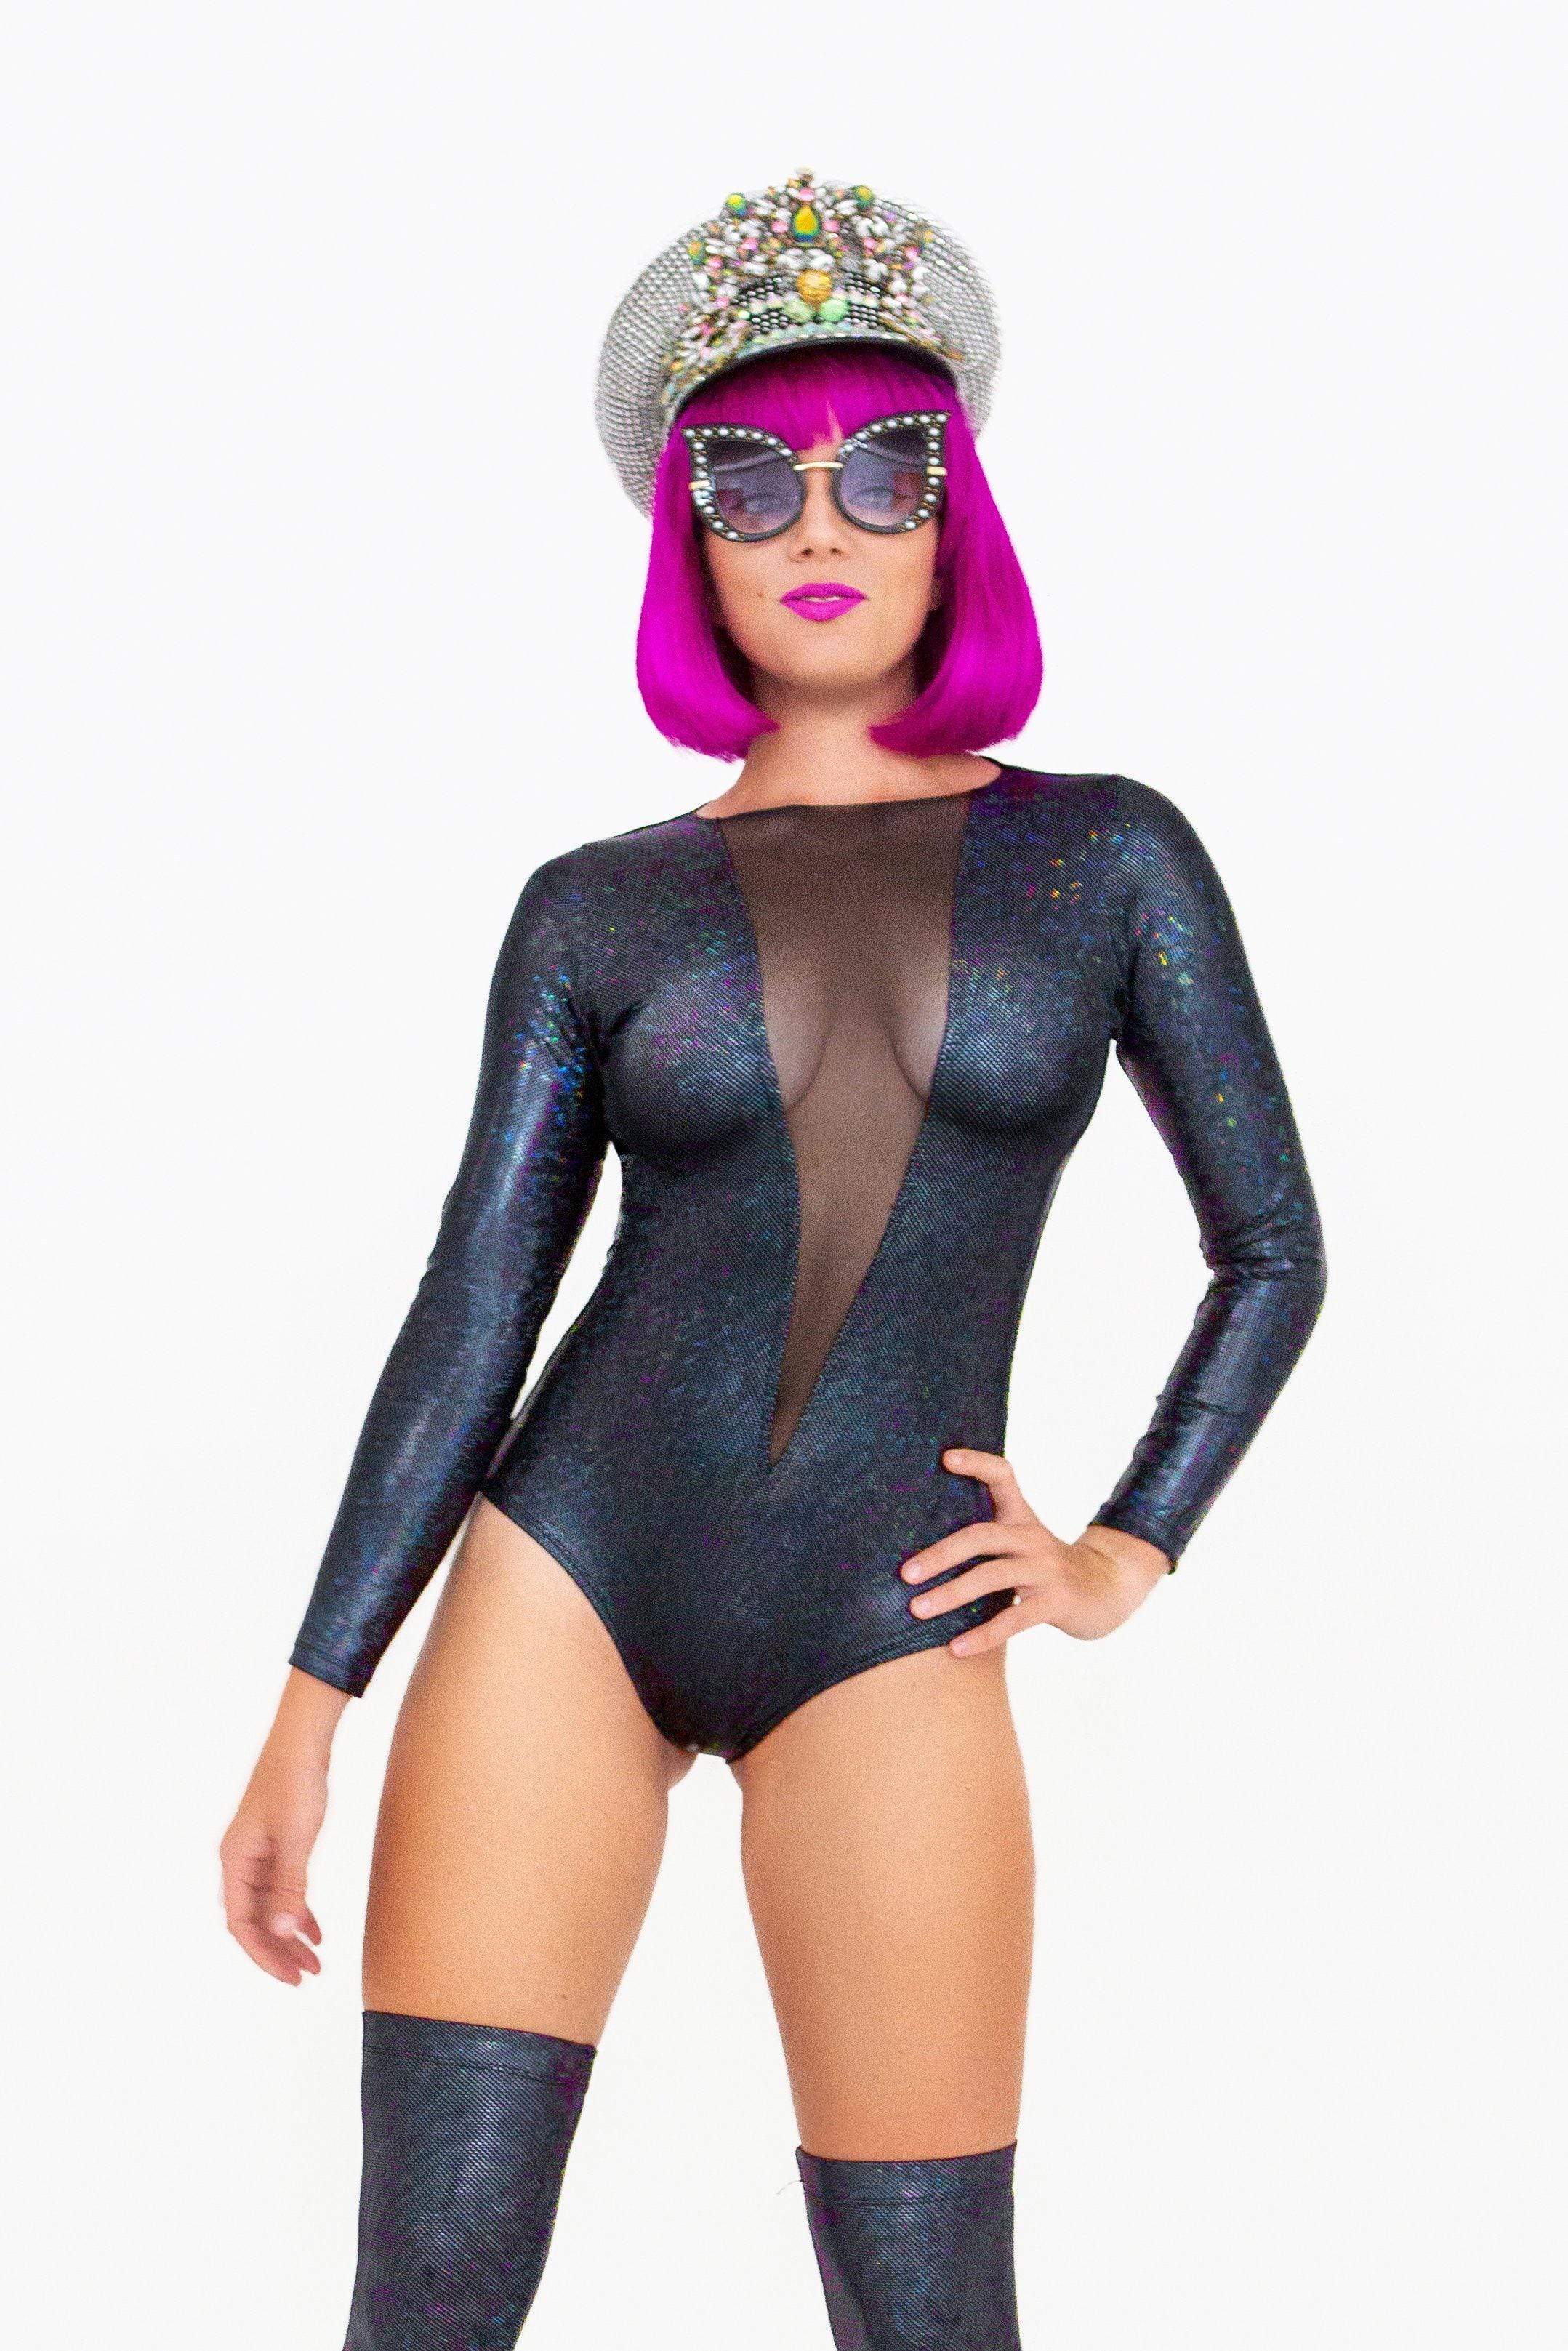 Hologram Spandex Jumpsuit, Bodysuit for Woman or Man, Custom Made